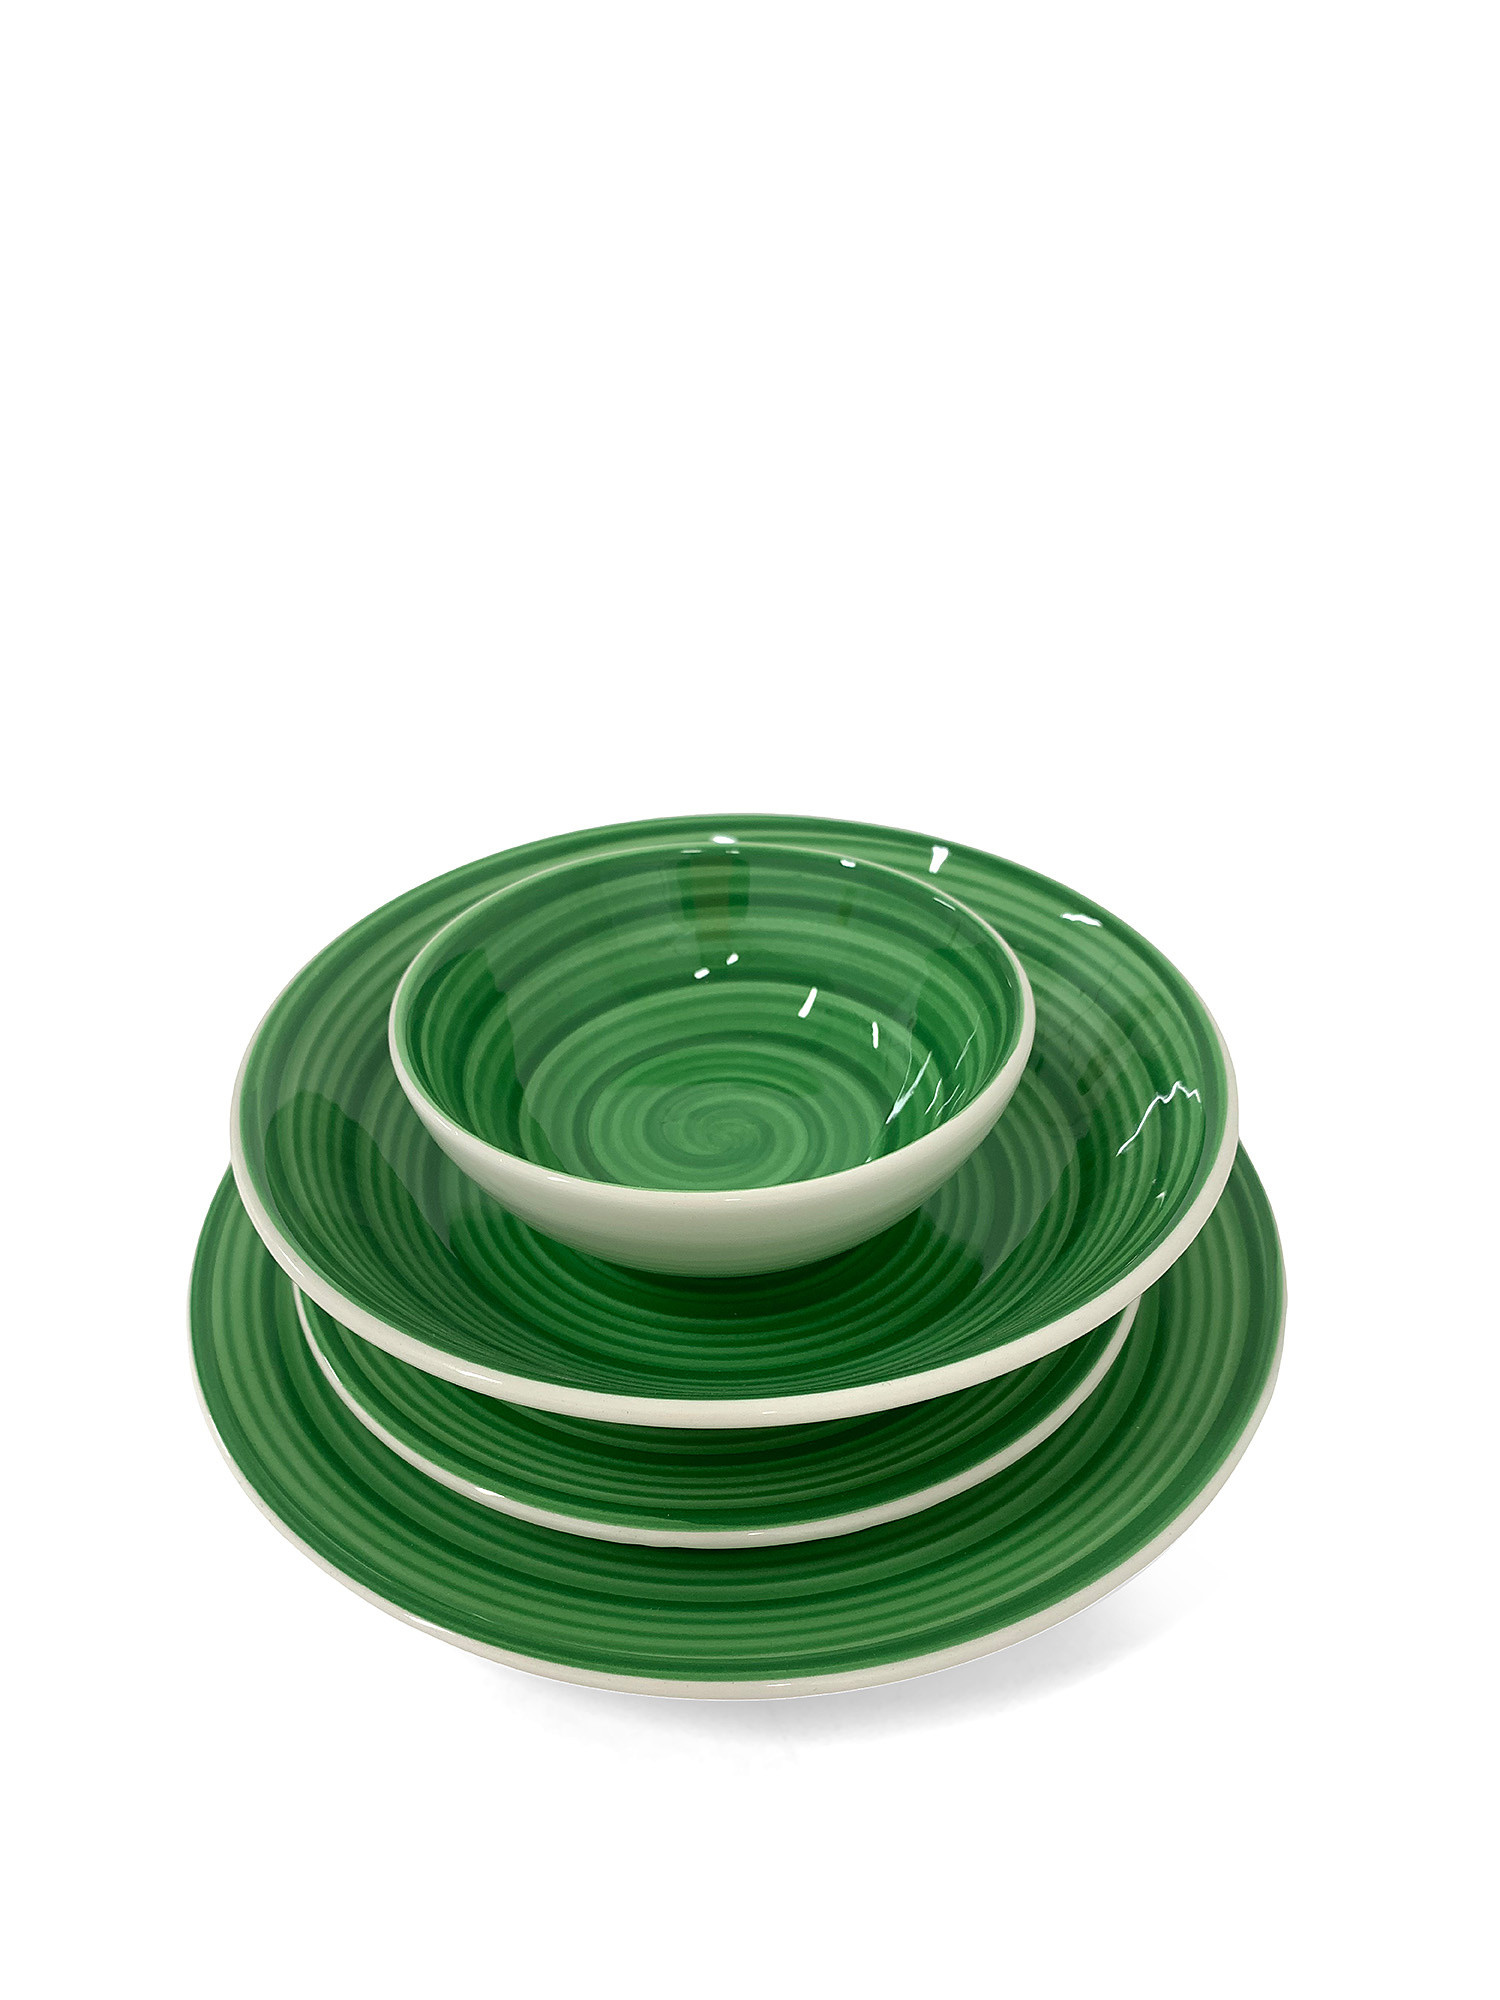 Piatto fondo ceramica dipinta a mano Spirale, Verde, large image number 1